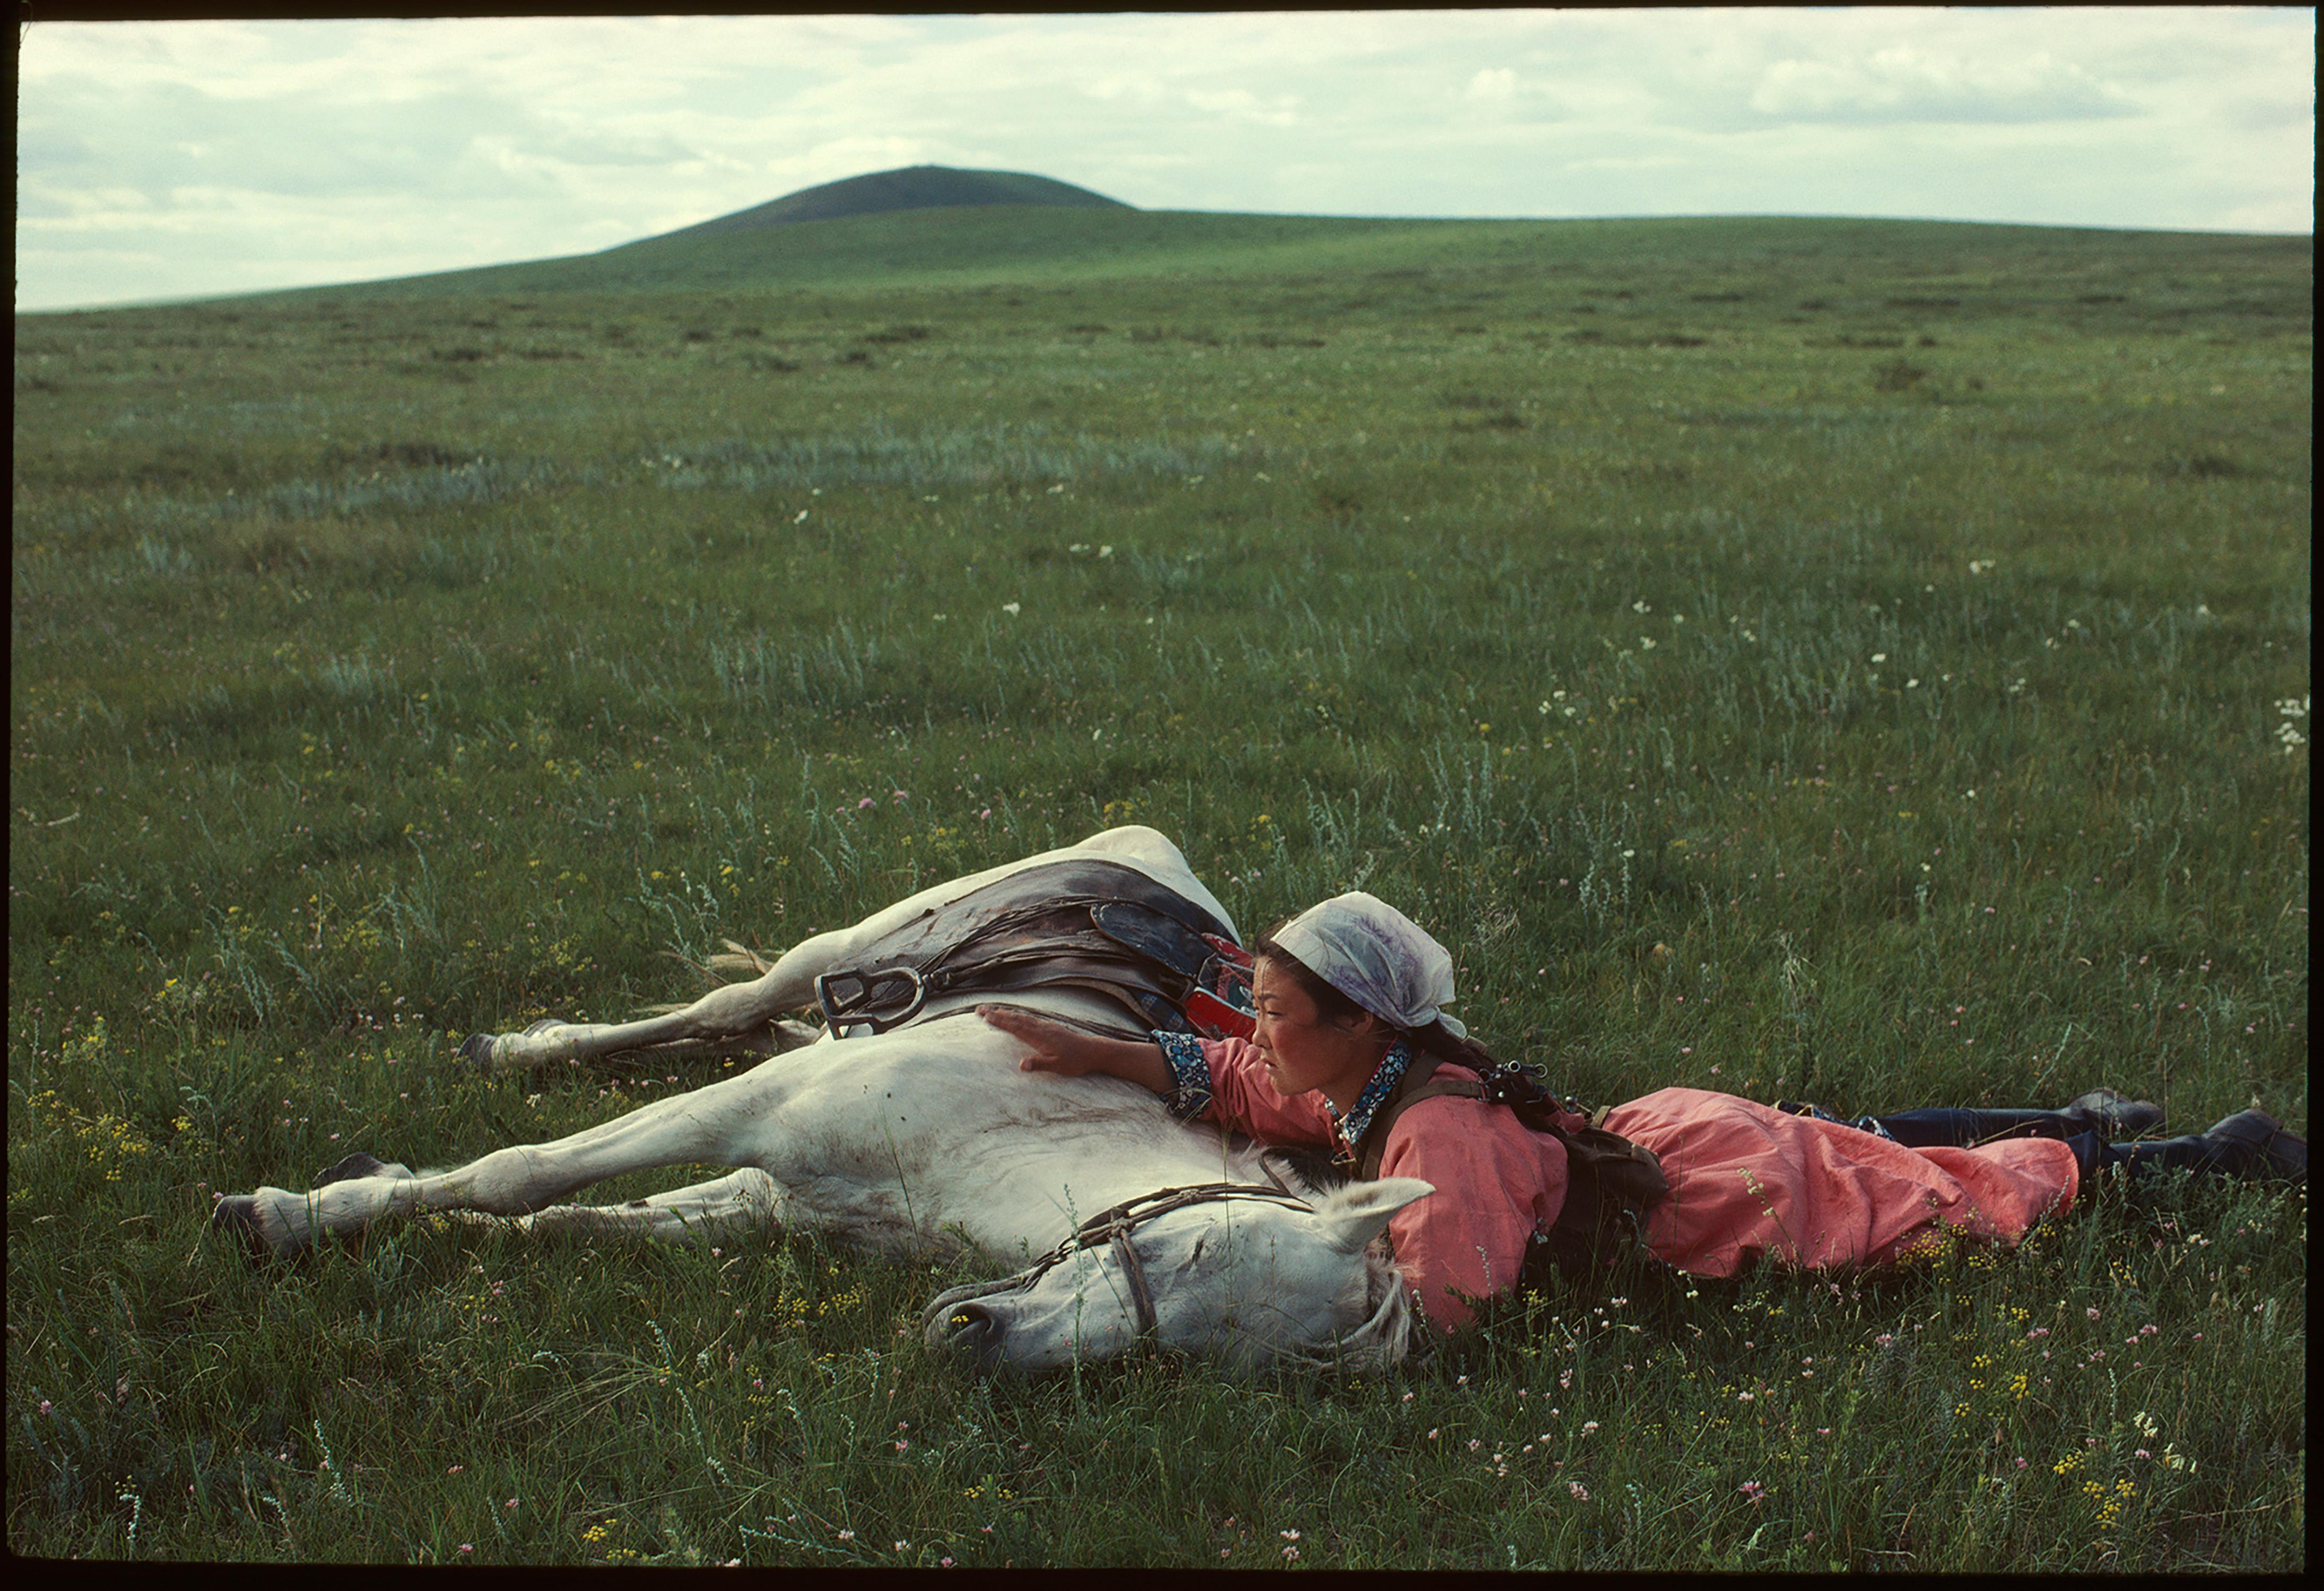 Eve Arnold - A Woman Trains a Horse, Fotografie 1979, Nachdruck